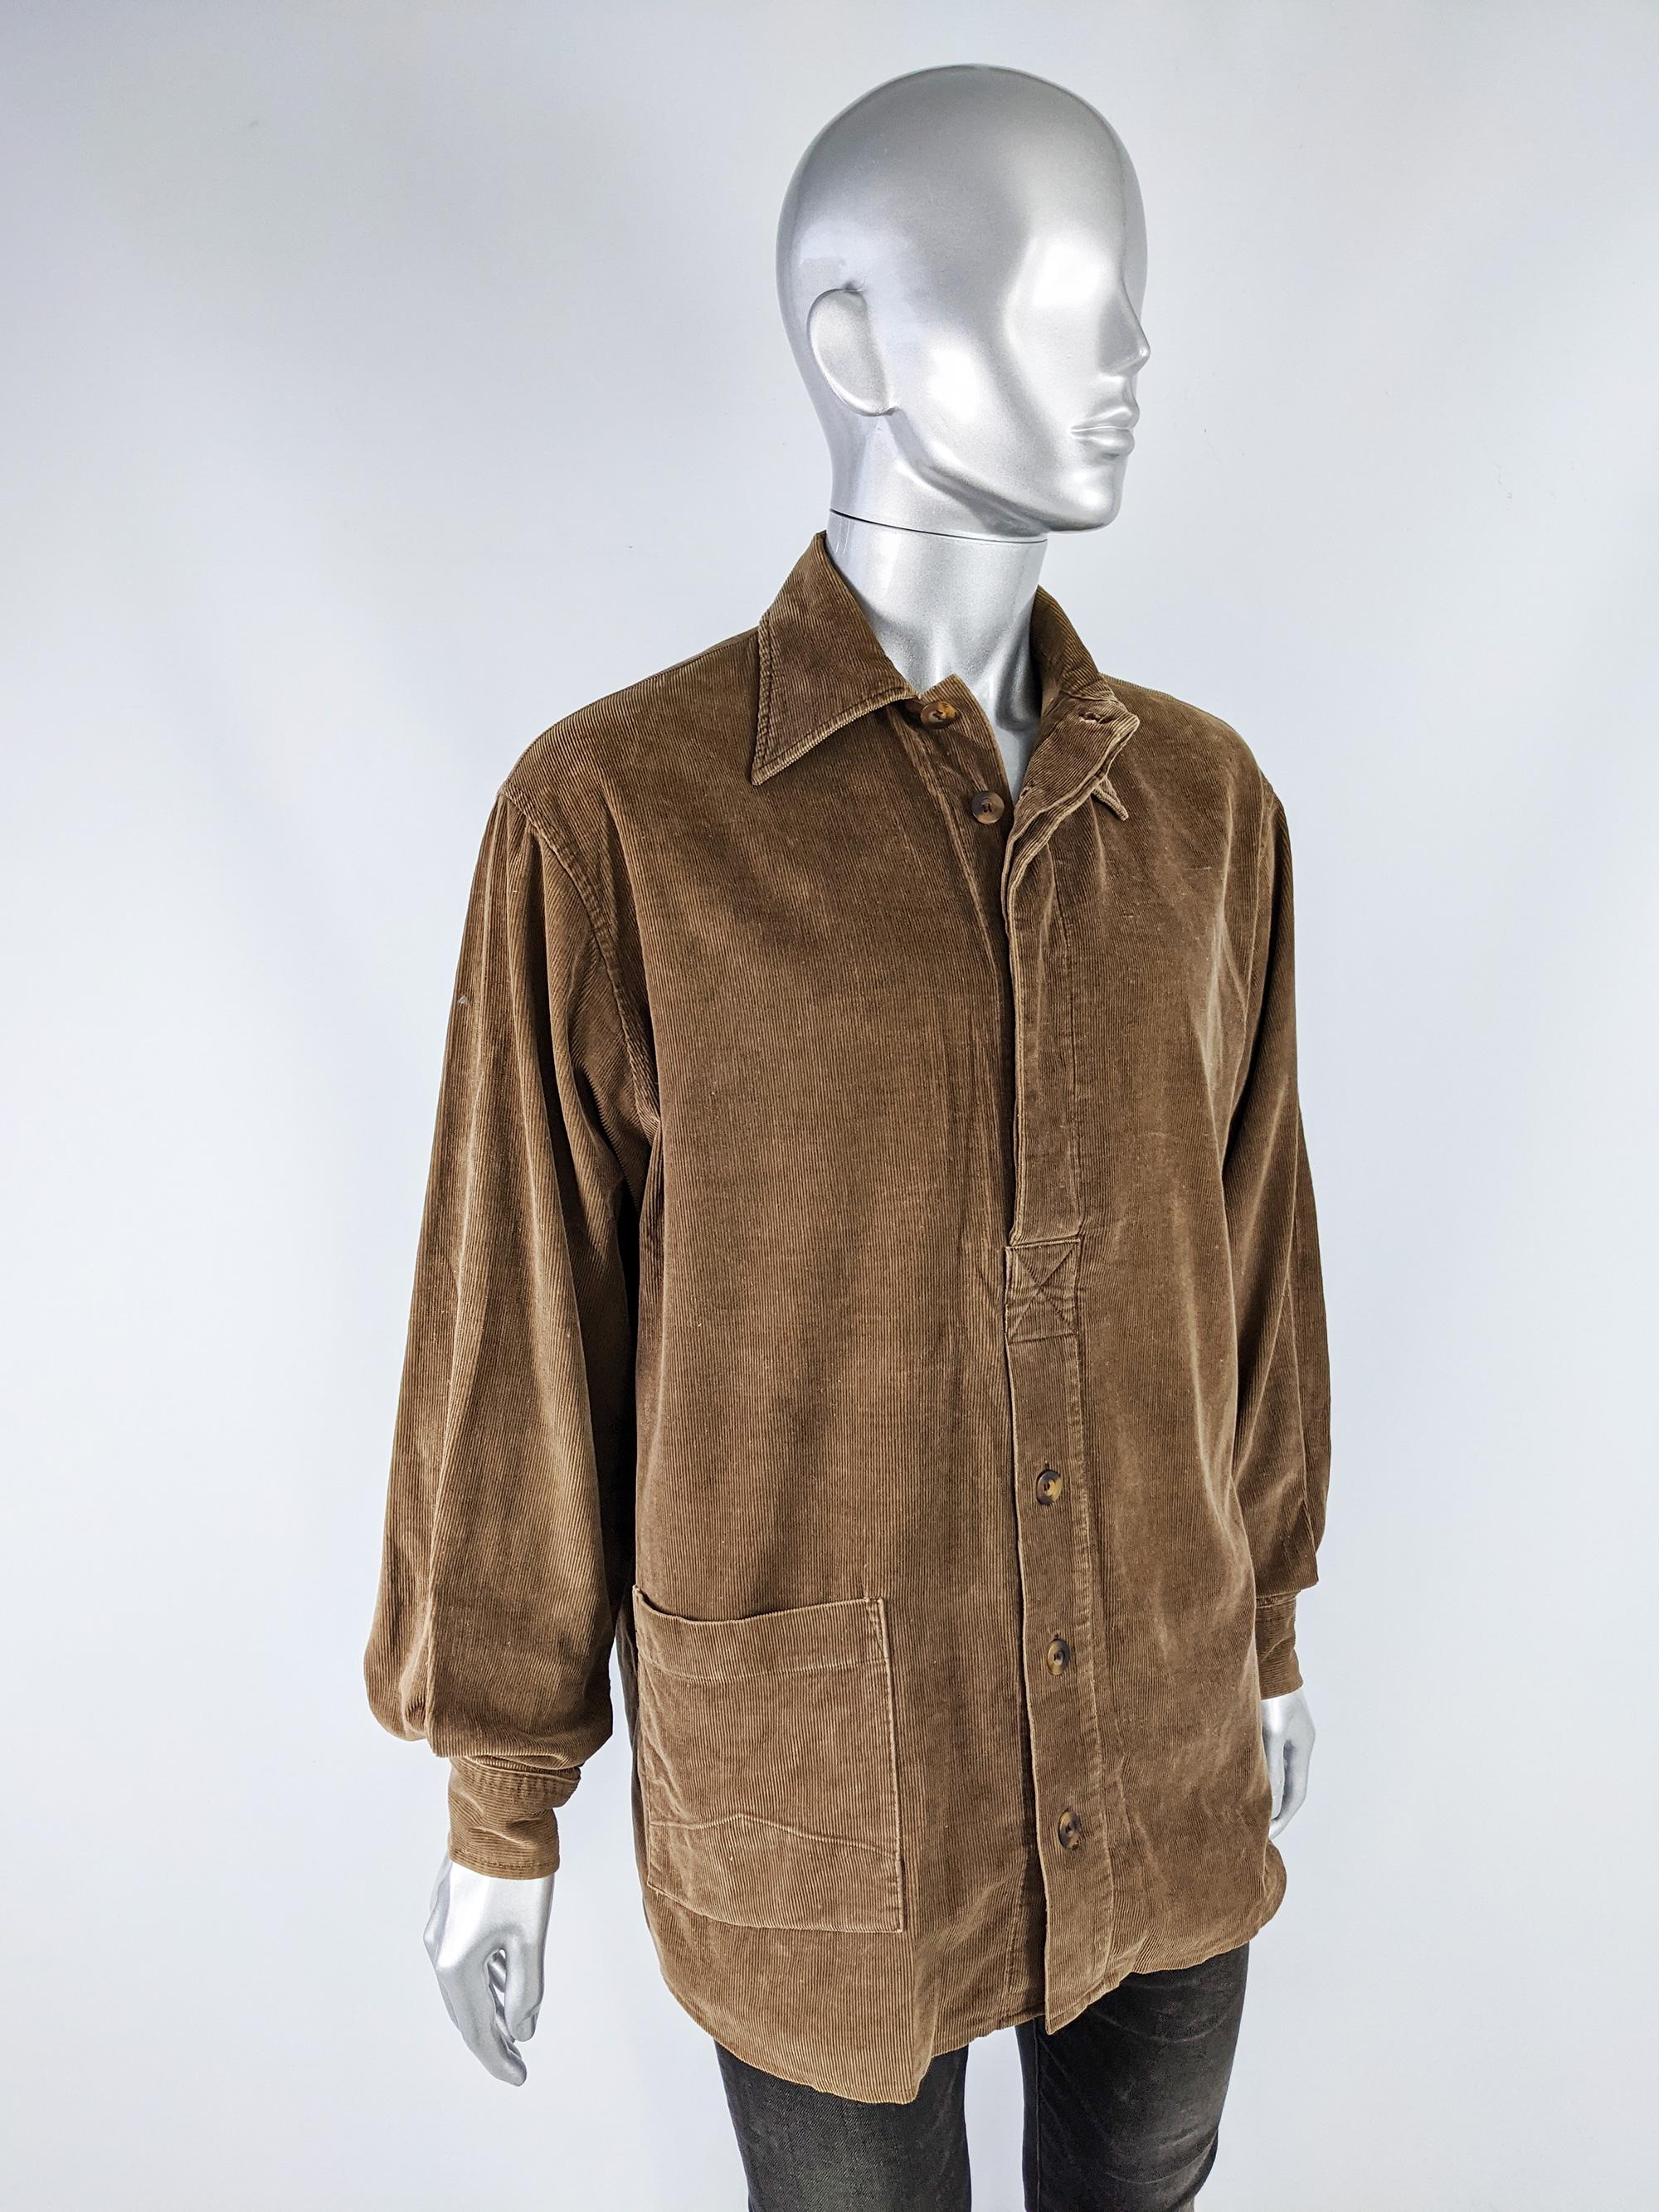 Joe Casely Hayford Vintage Brown Cord Shirt, 1990s 1